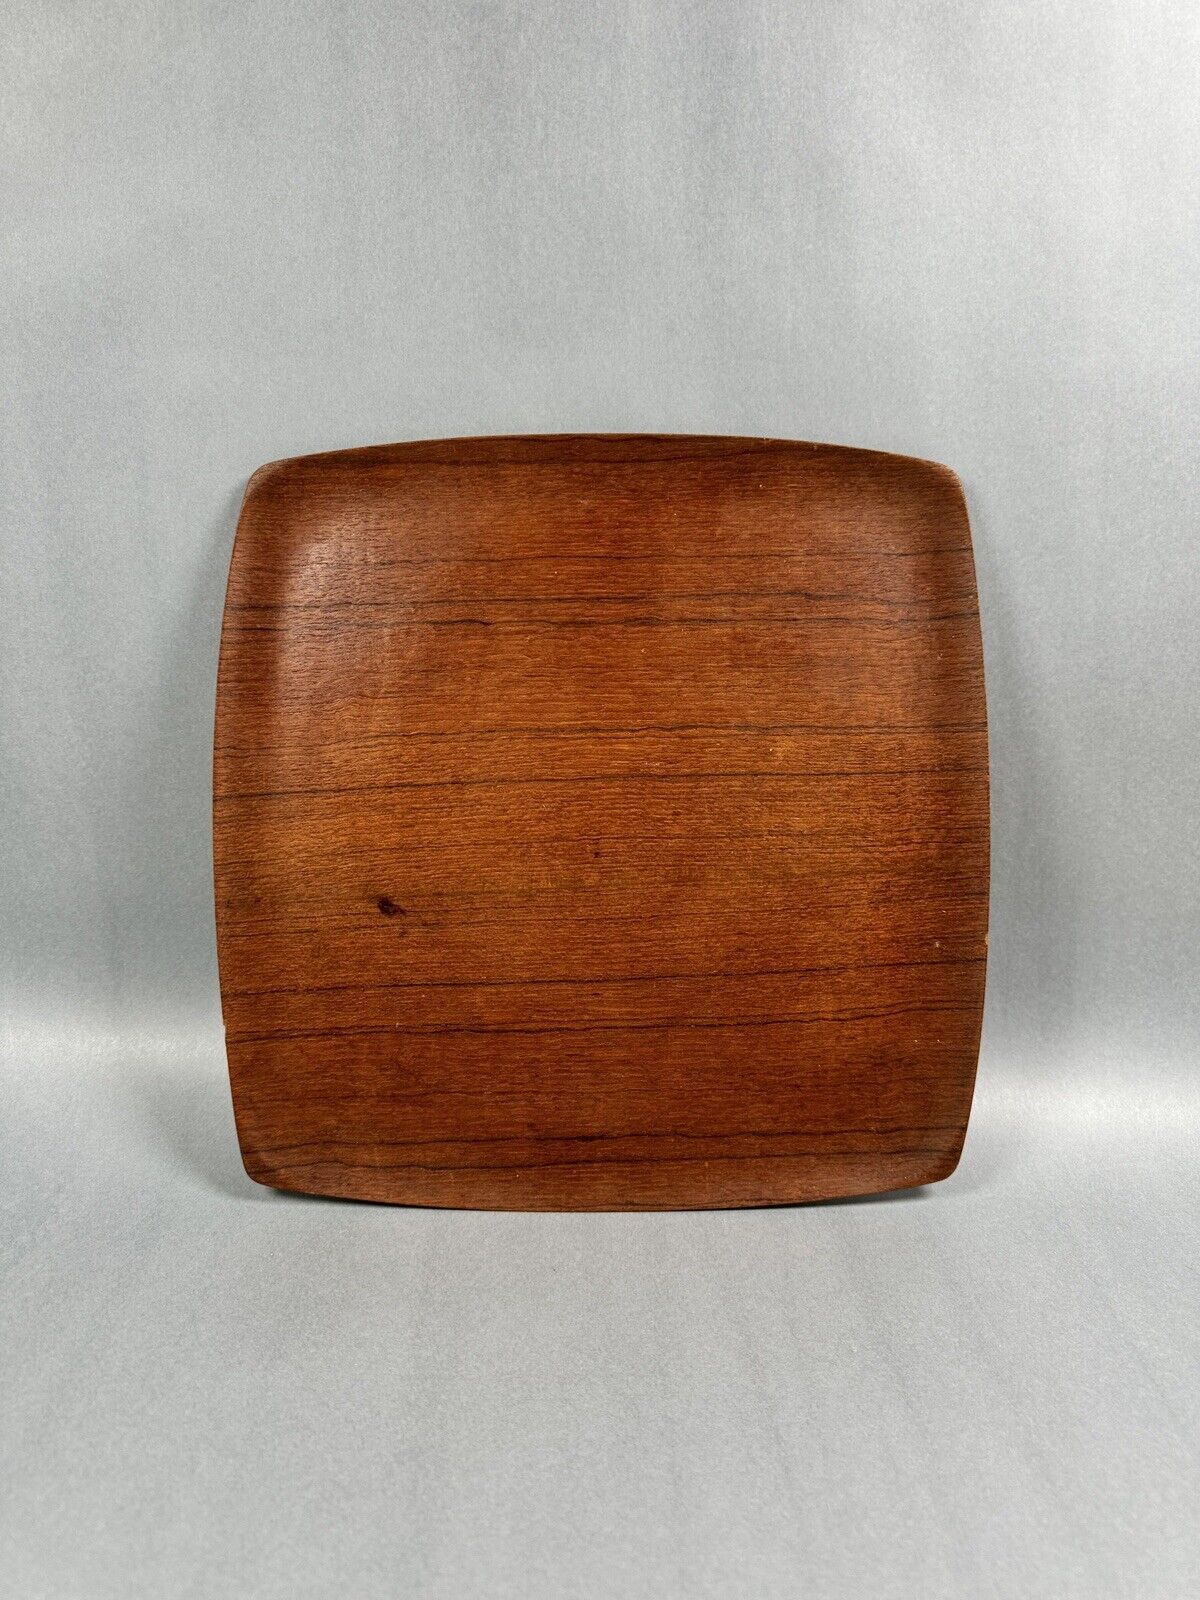 Rare teak bentwood tray by Shigemichi Aomine for NCC Japan vintage teak wood